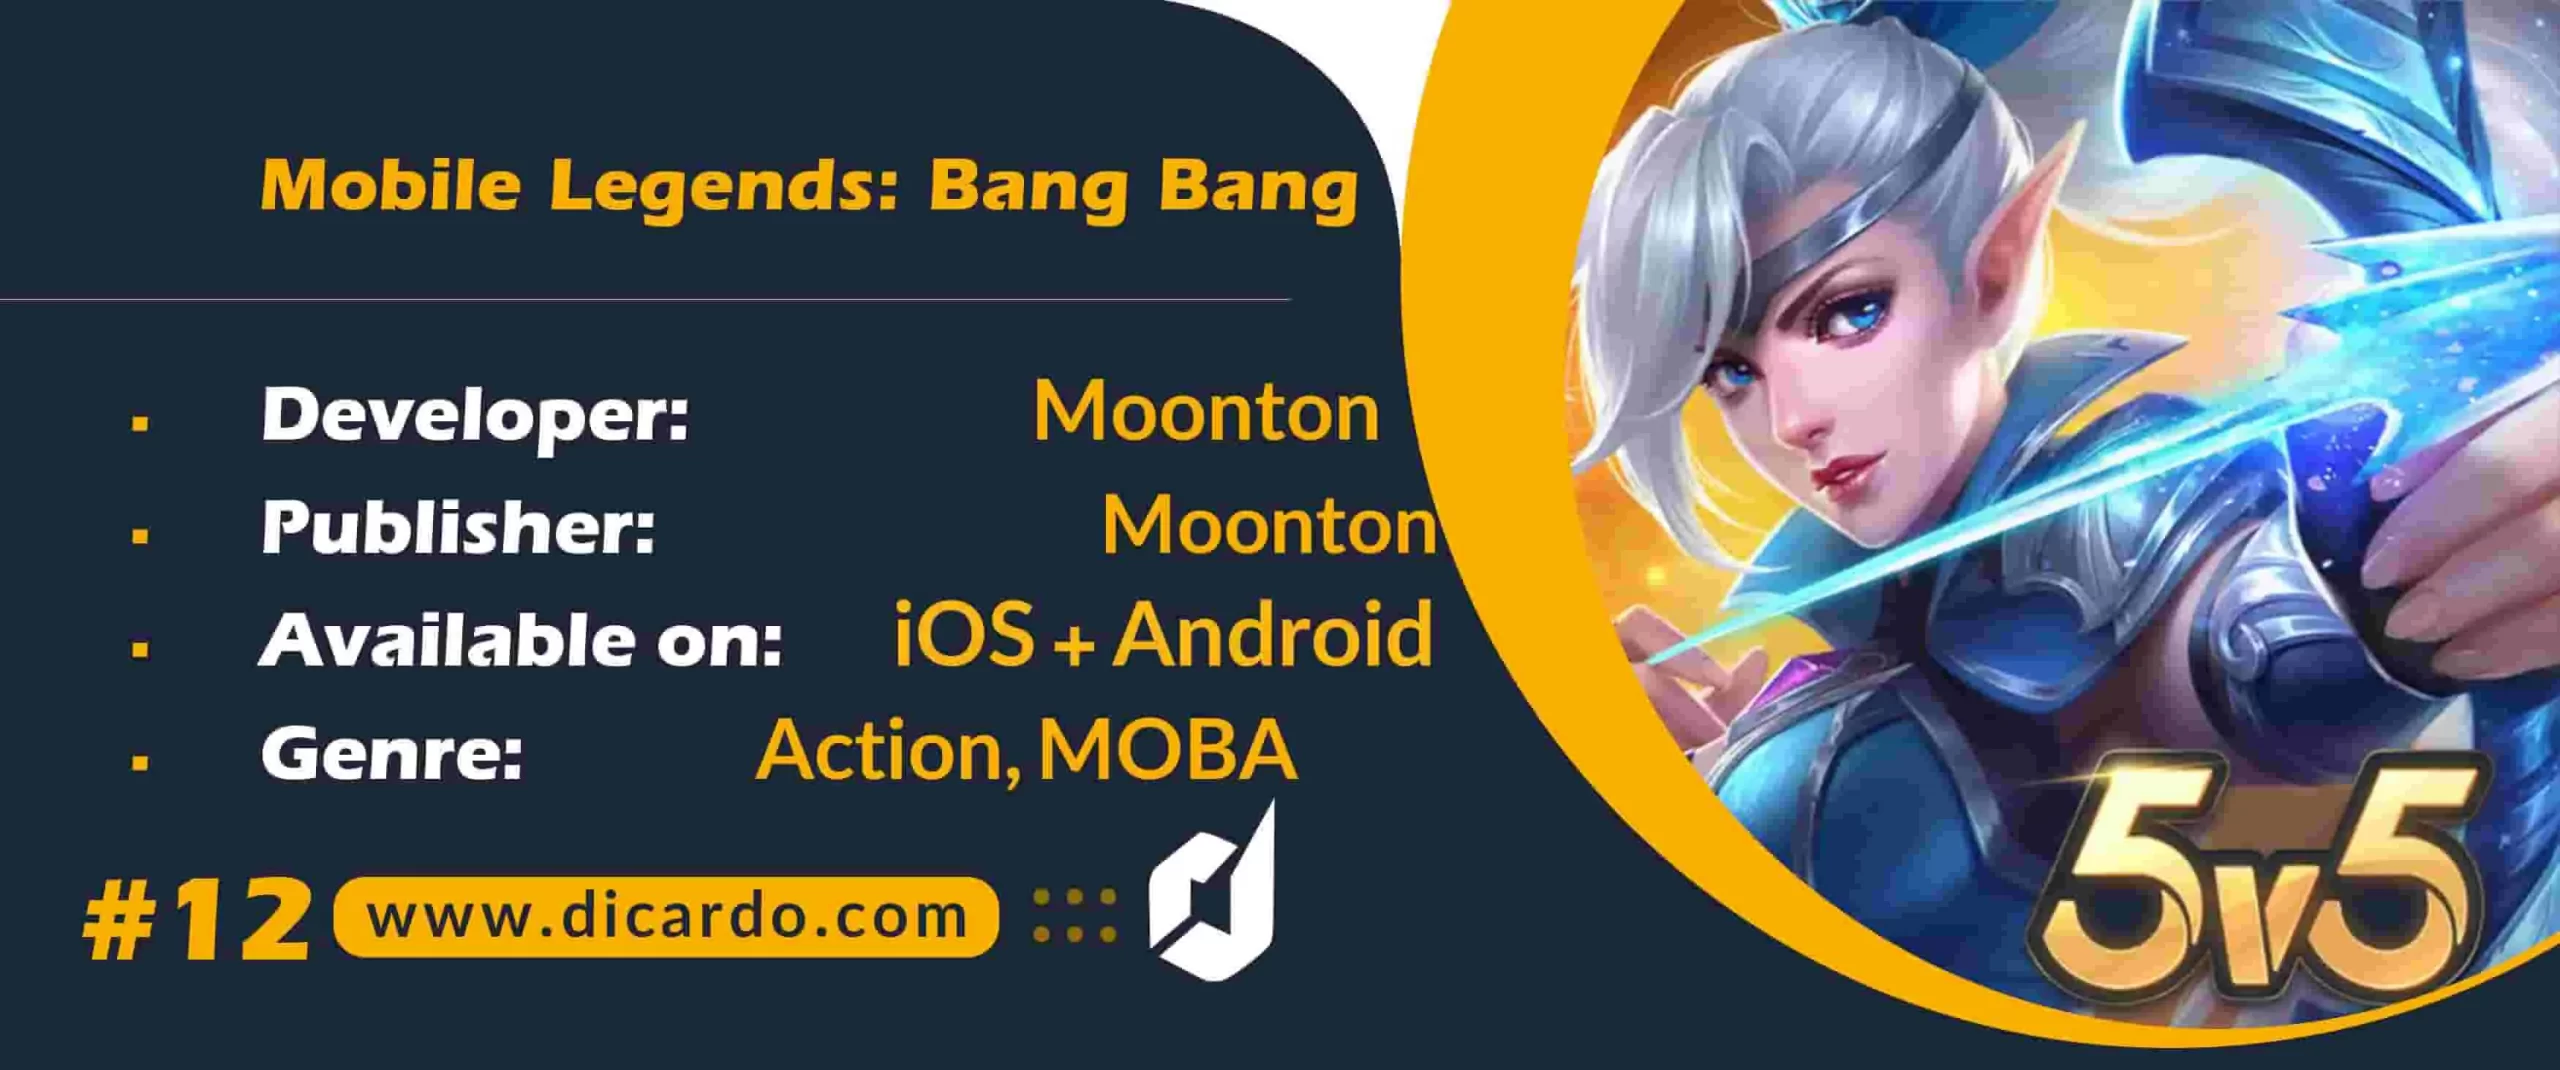 #12 موبایل لجندز: بنگ بنگ Mobile Legends: Bang Bang